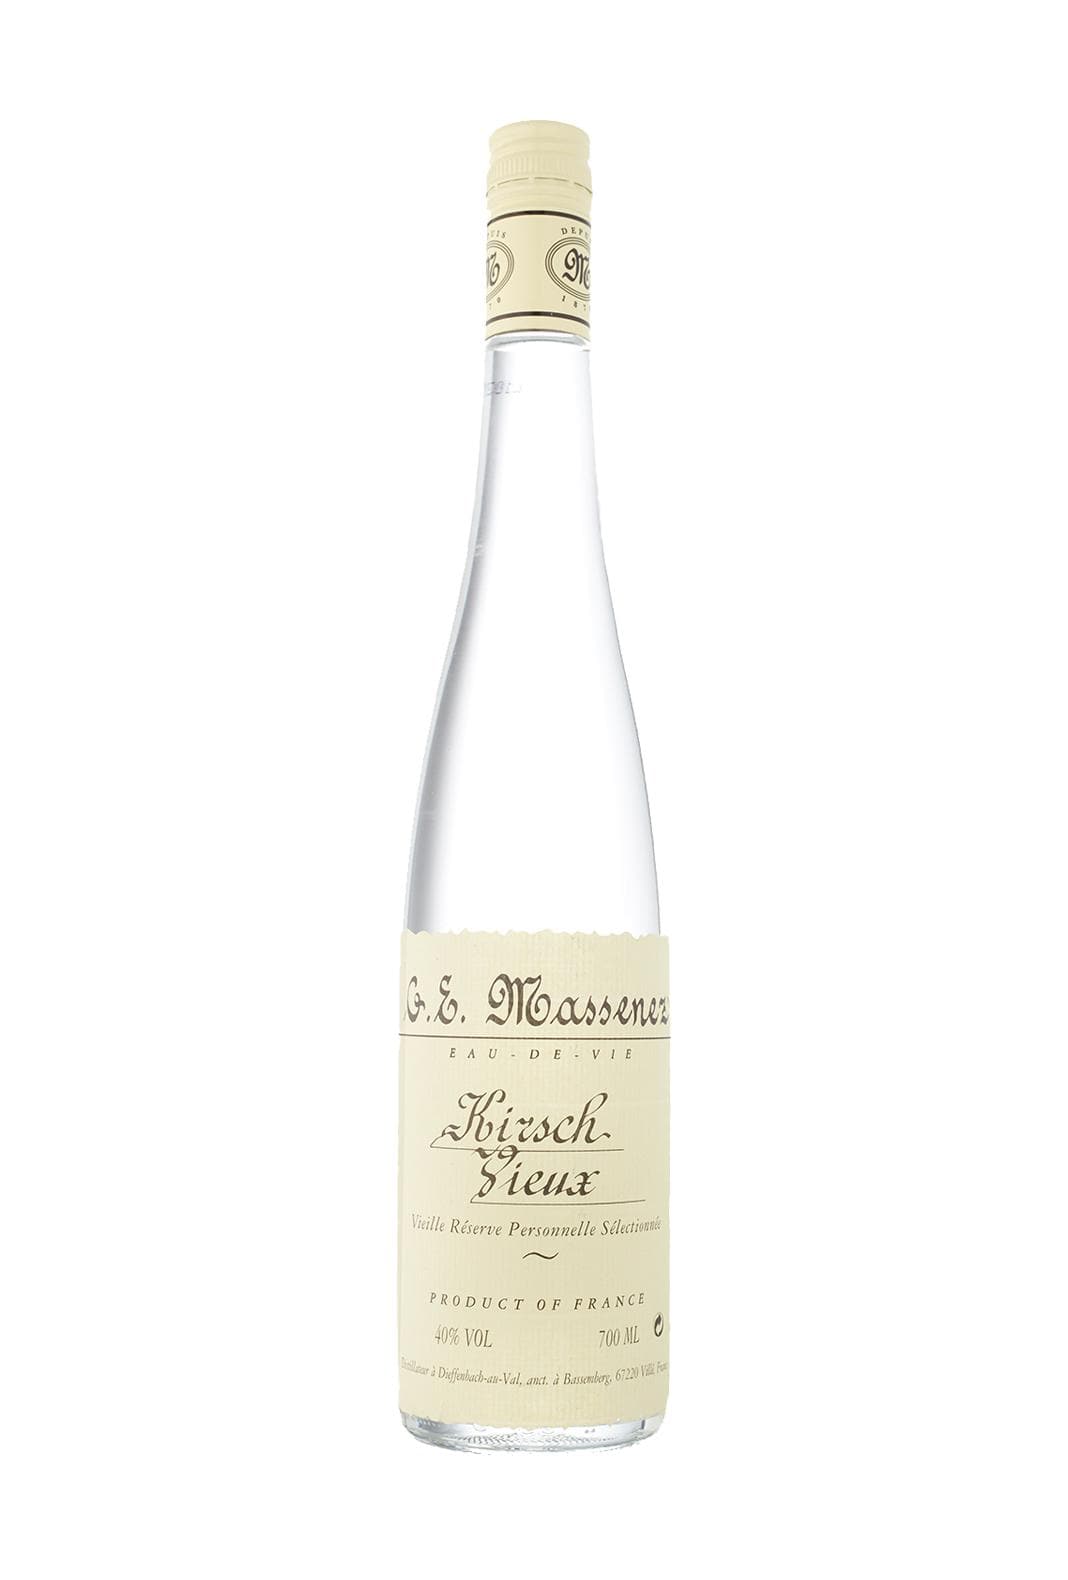 Massenez Eau de Vie Kirsch Vieux (Cherry Spirit) 40% 700ml | Liqueurs | Shop online at Spirits of France